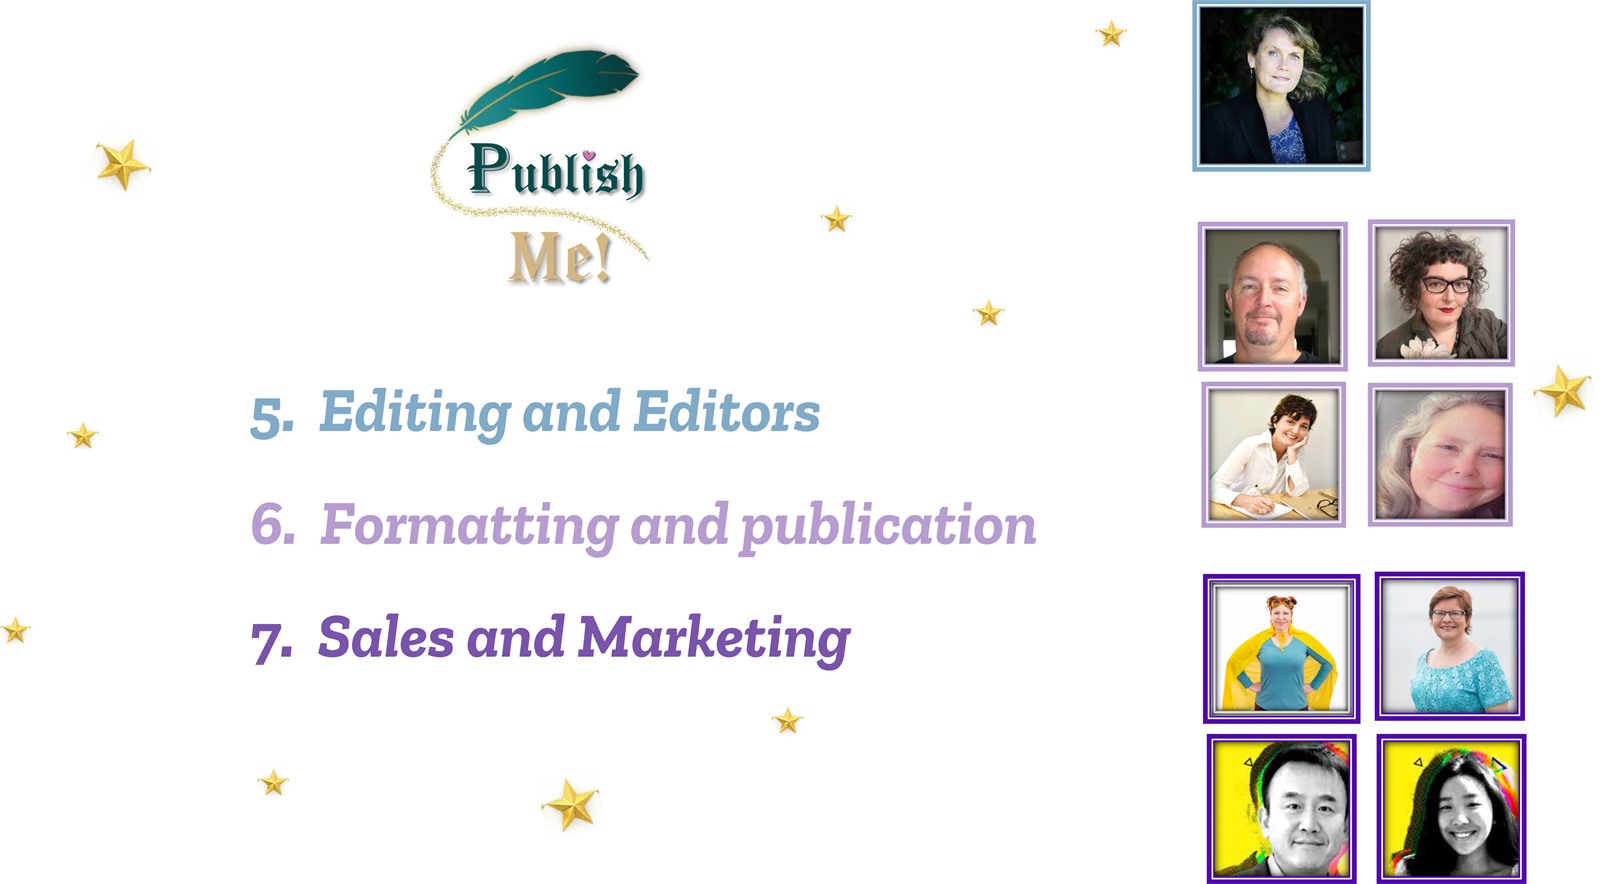 PublishMe Tutoring Team - Emma Neale and others